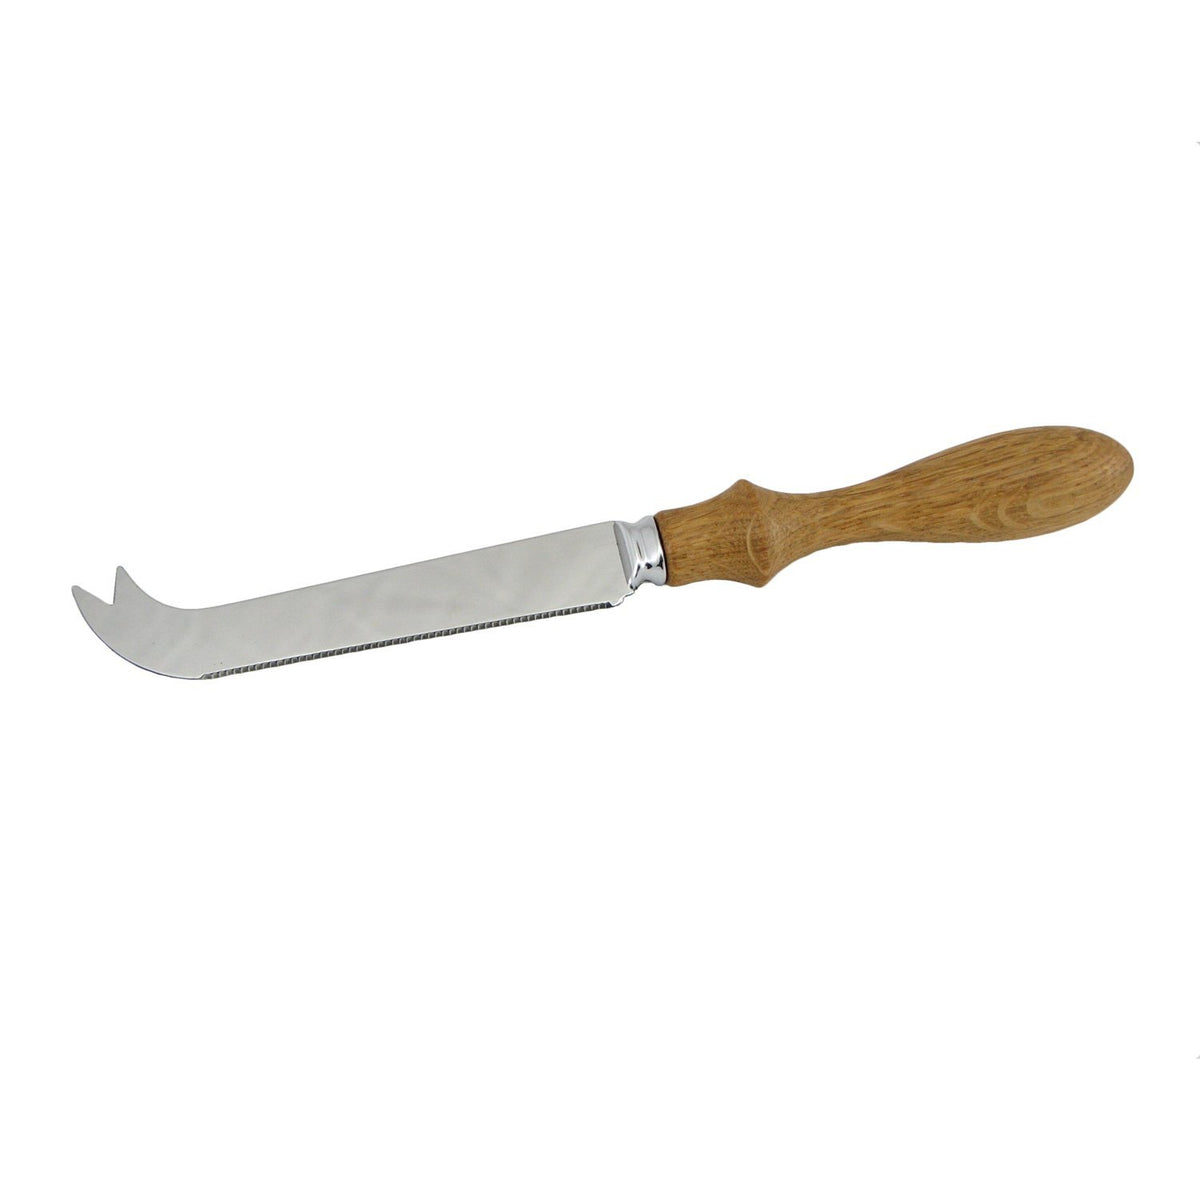 Cheese knife - Made in Britain - BRIT LOCKER